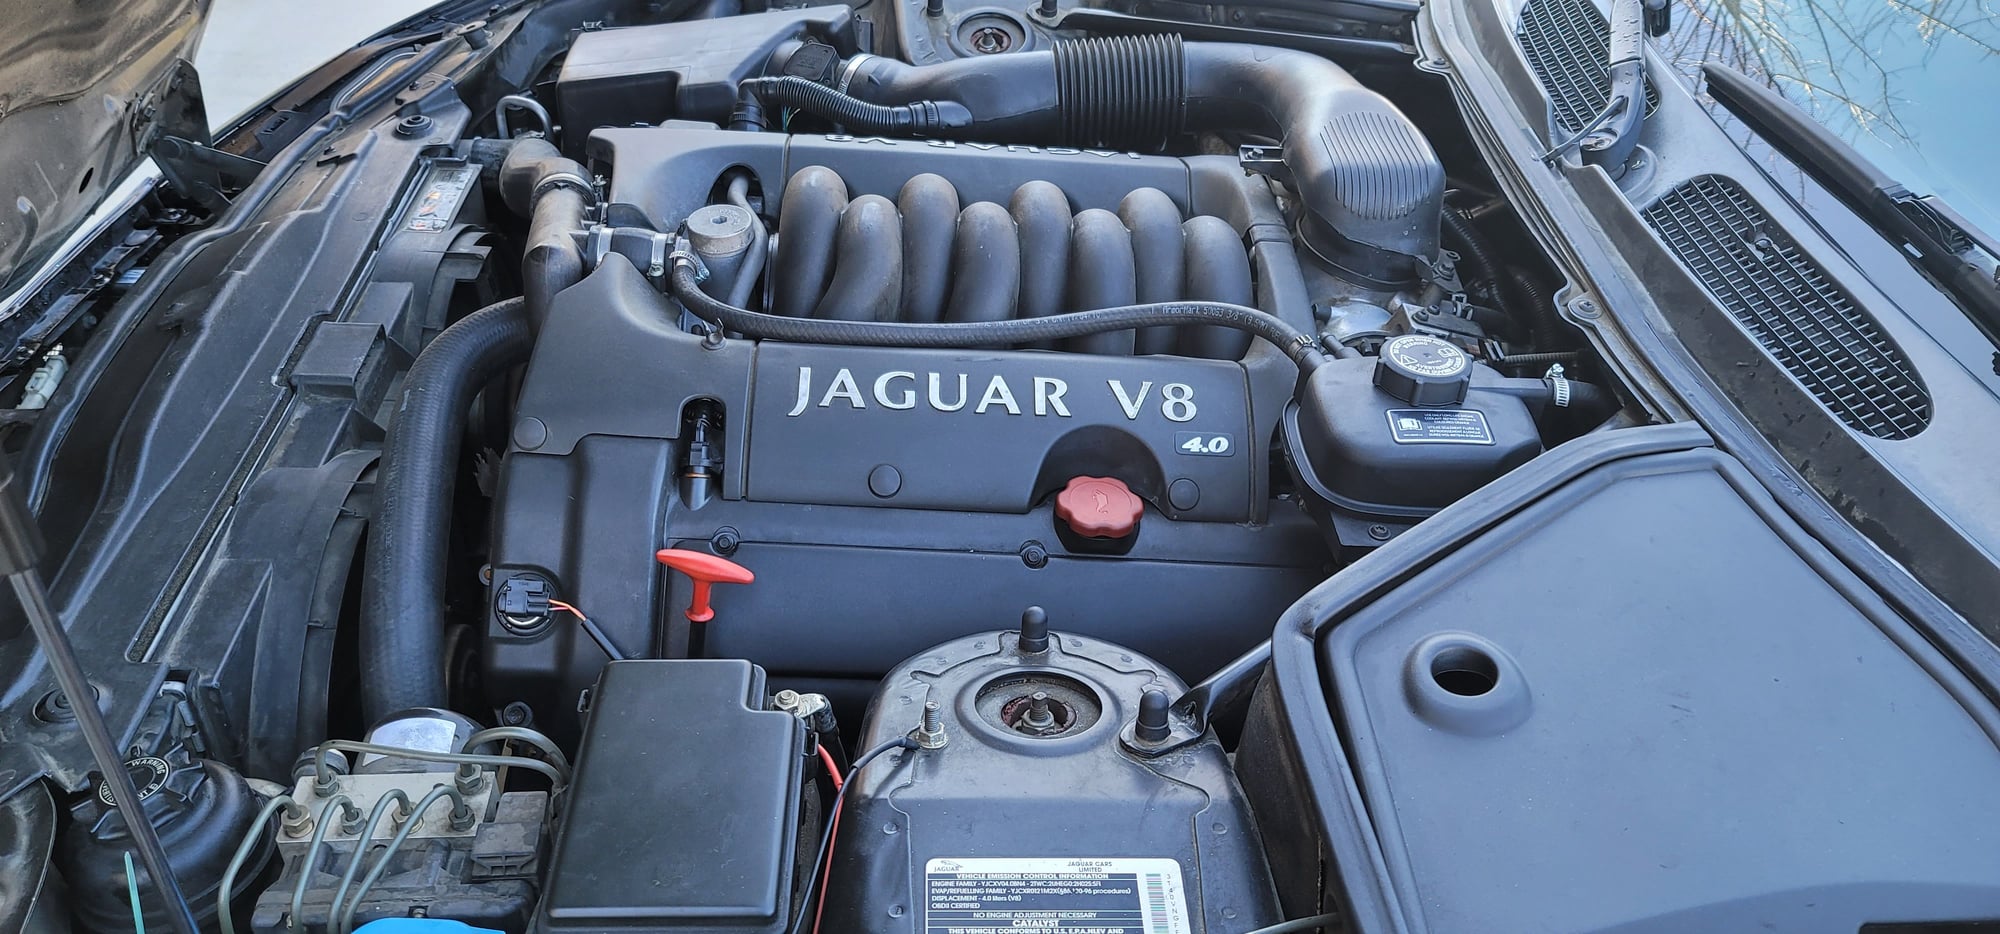 2000 Jaguar XK8 - 2000 Jaguar XK8 Black Cat - Used - VIN SAJJA42C2YNA08099 - 105,000 Miles - 8 cyl - 2WD - Automatic - Convertible - Black - Valencia, CA 91354, United States